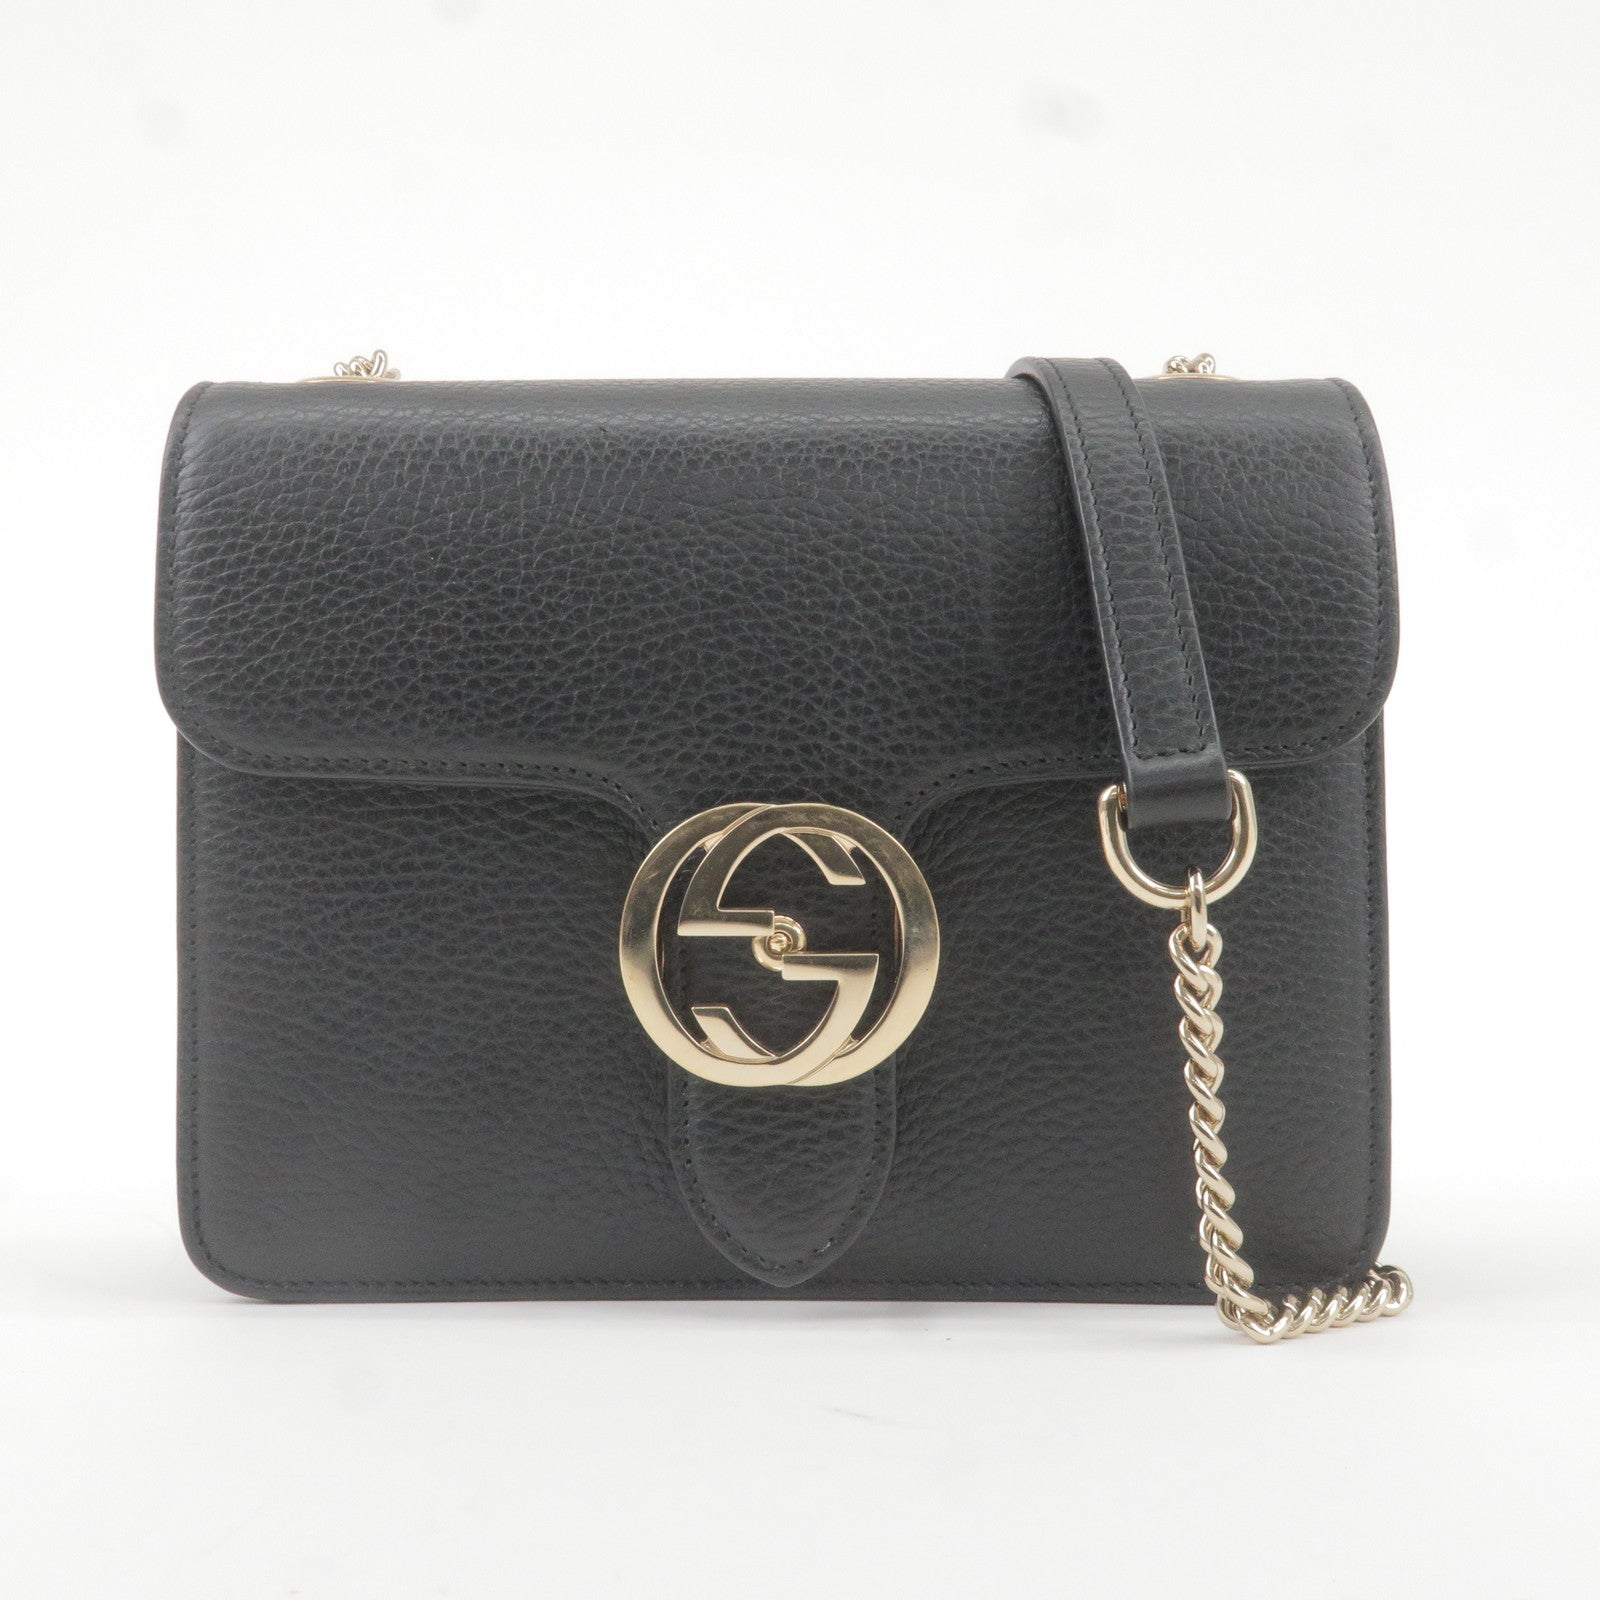 Gucci interlocking logo chain bag black